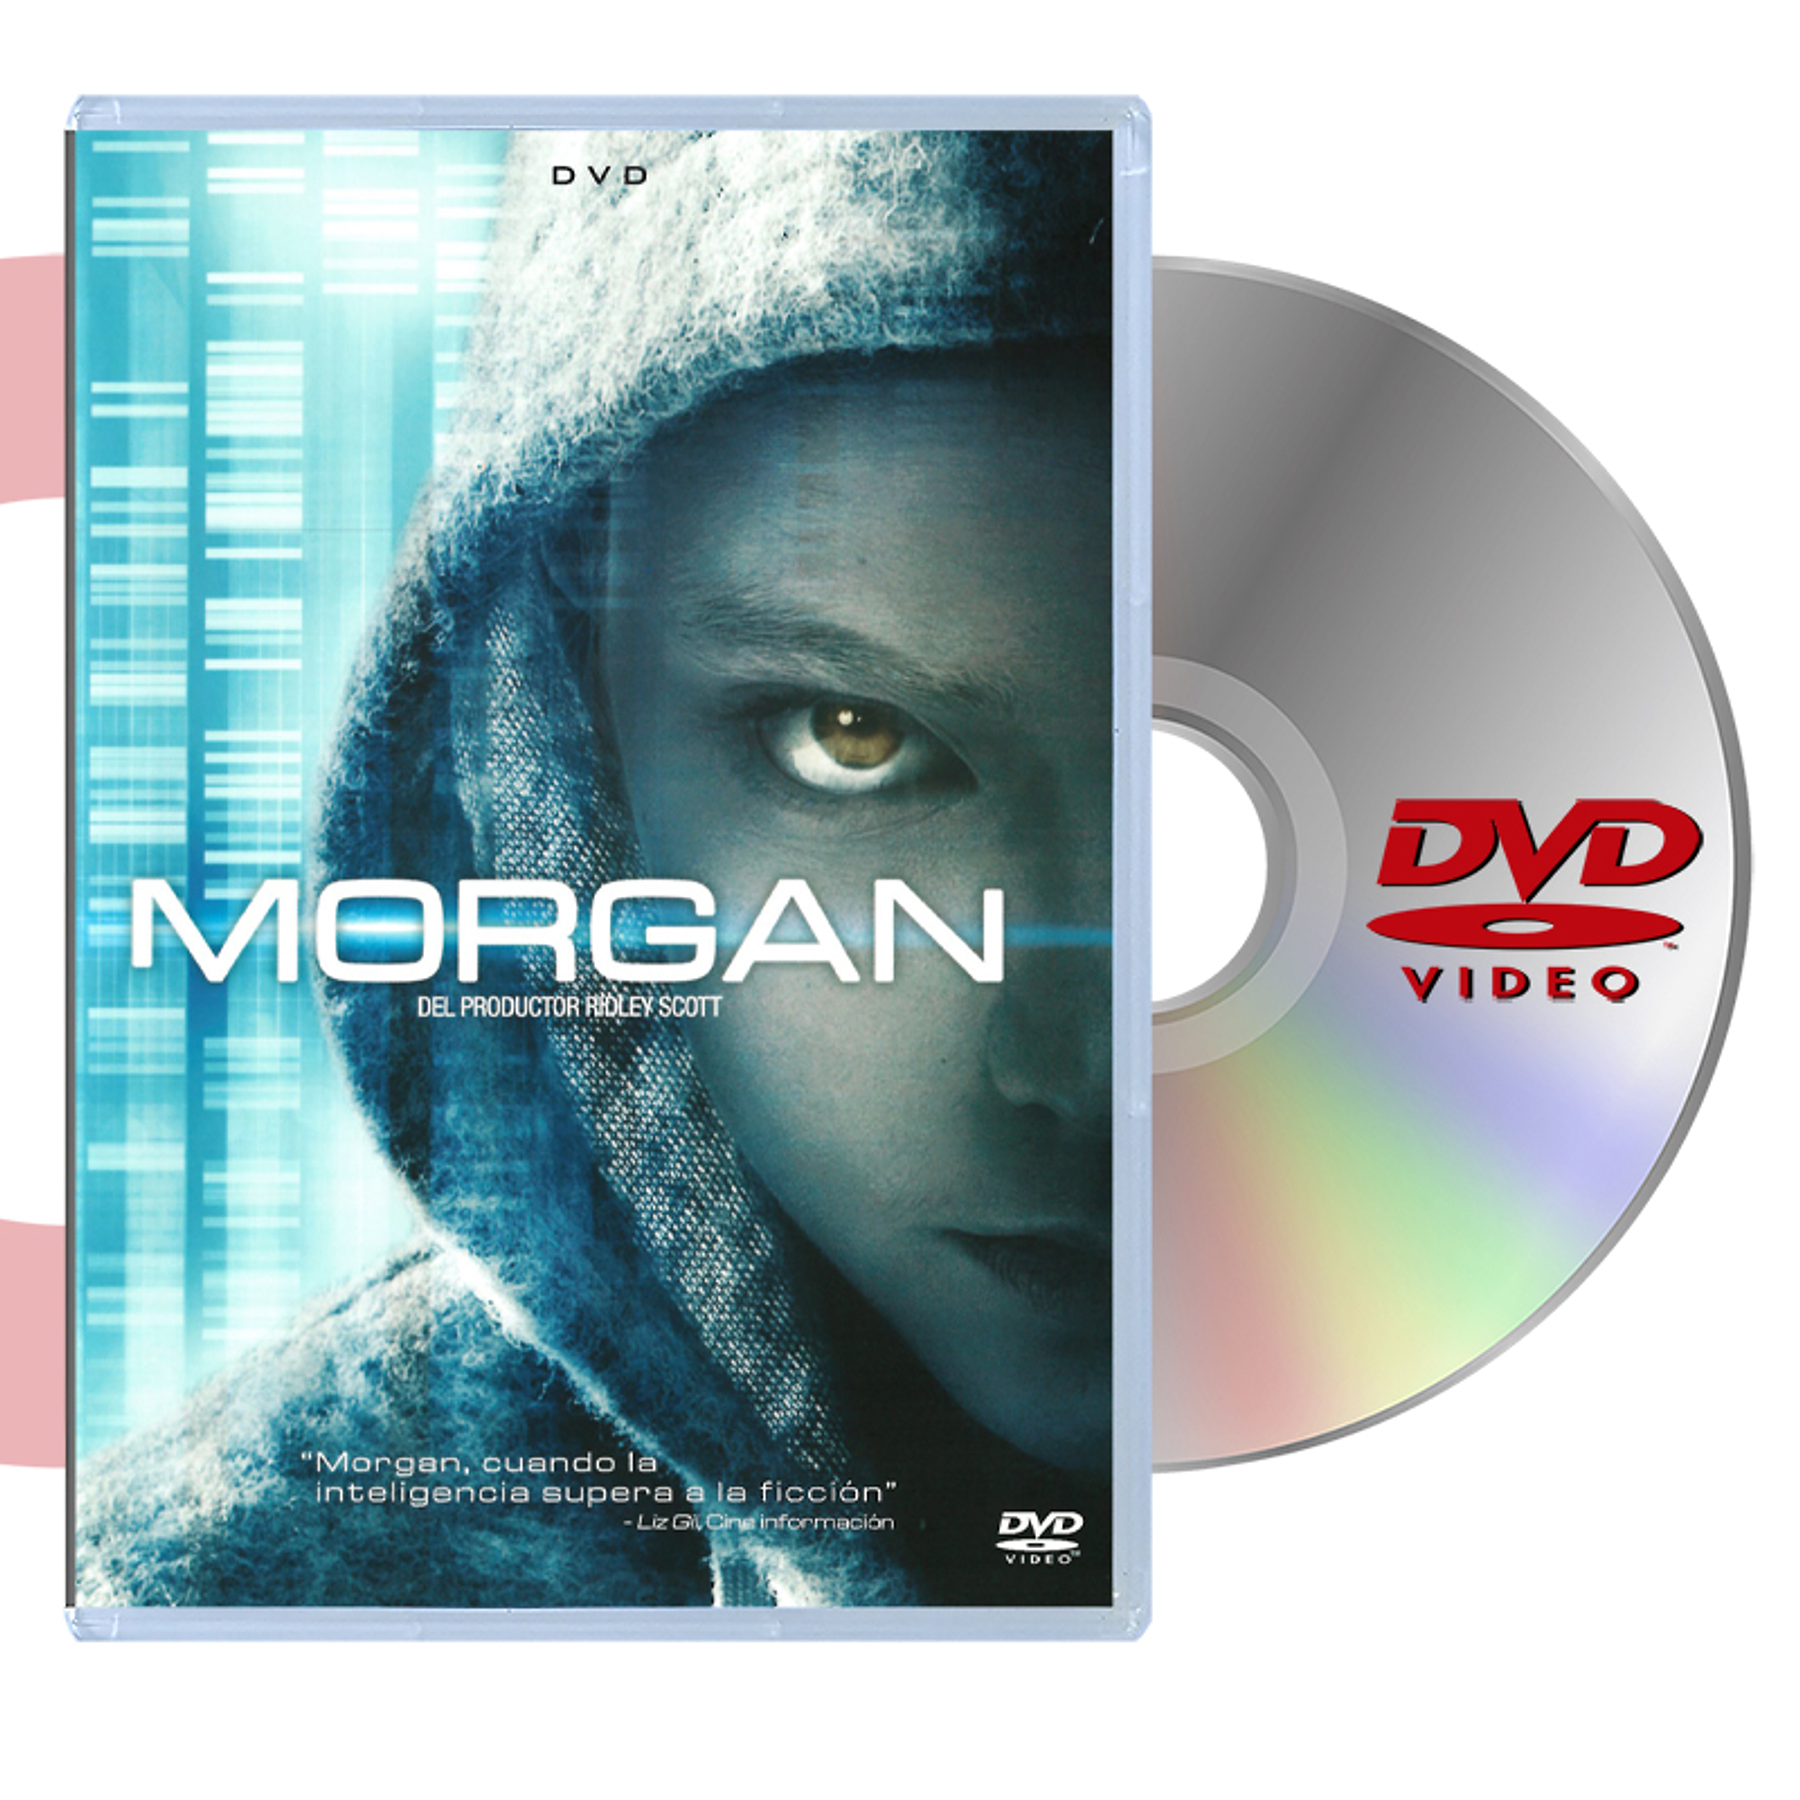 DVD MORGAN